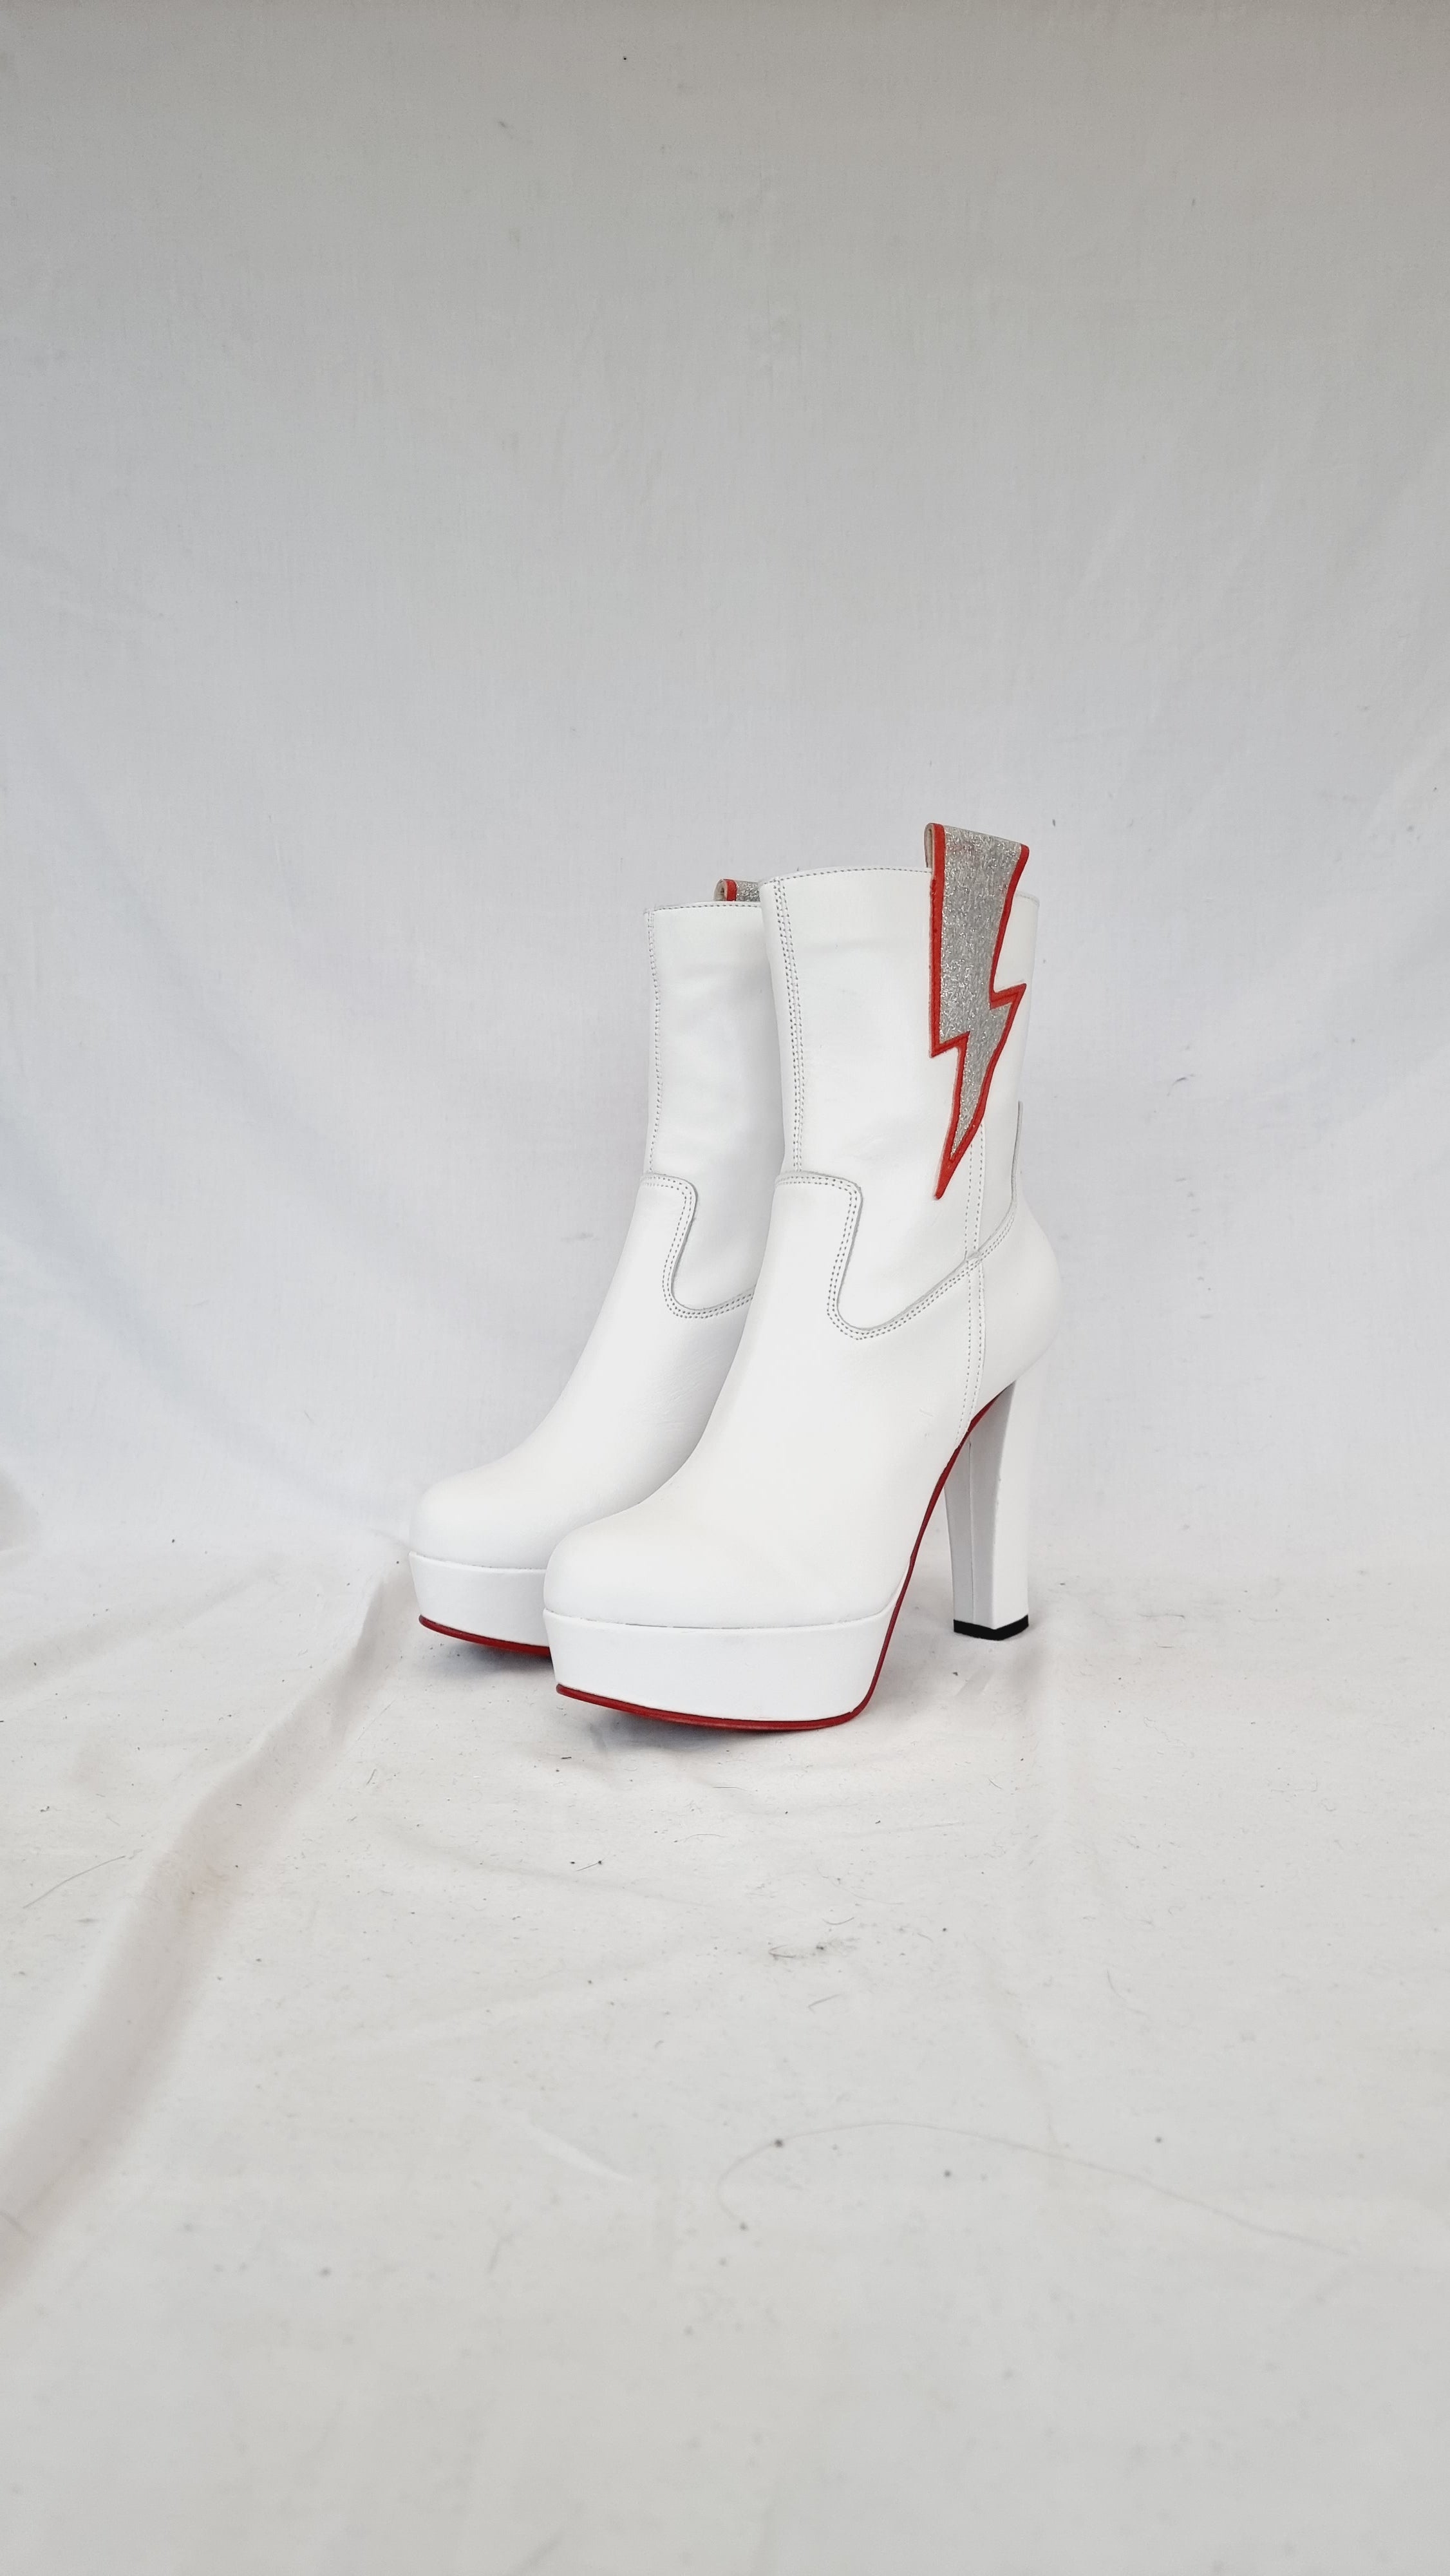 Leather heels Antonio Croce Black size 38 EU in Leather - 21708923